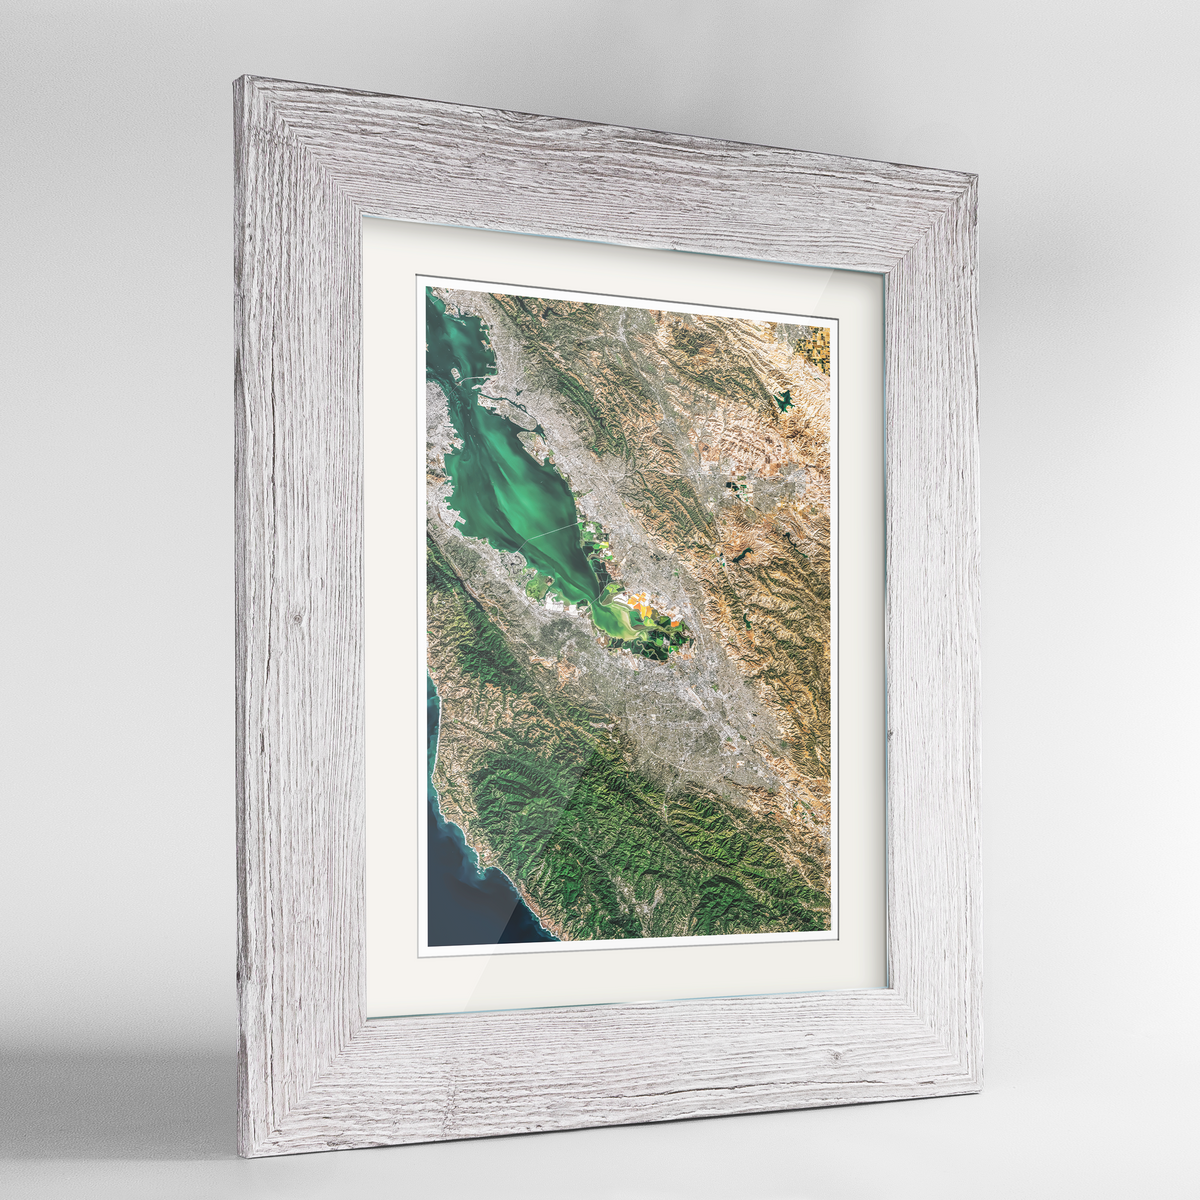 San Jose Earth Photography Art Print - Framed